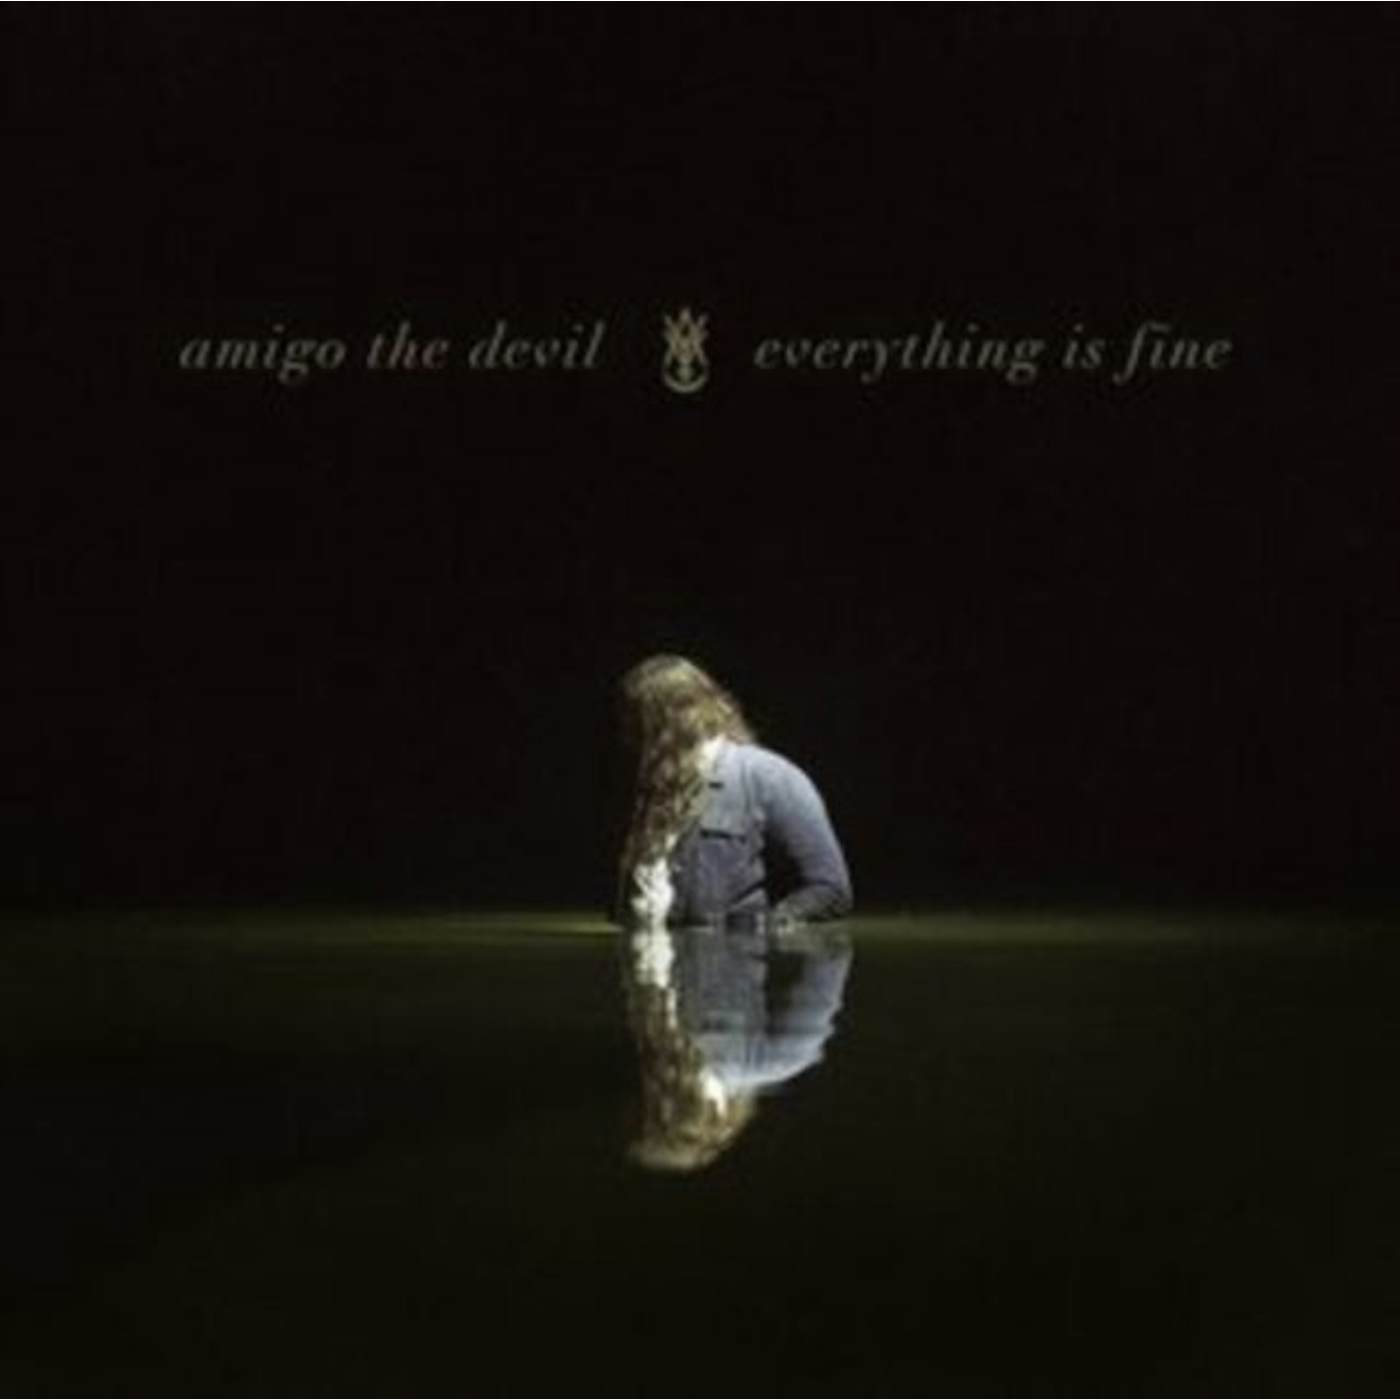 Amigo The Devil LP - Everything Is Fine (Vinyl)